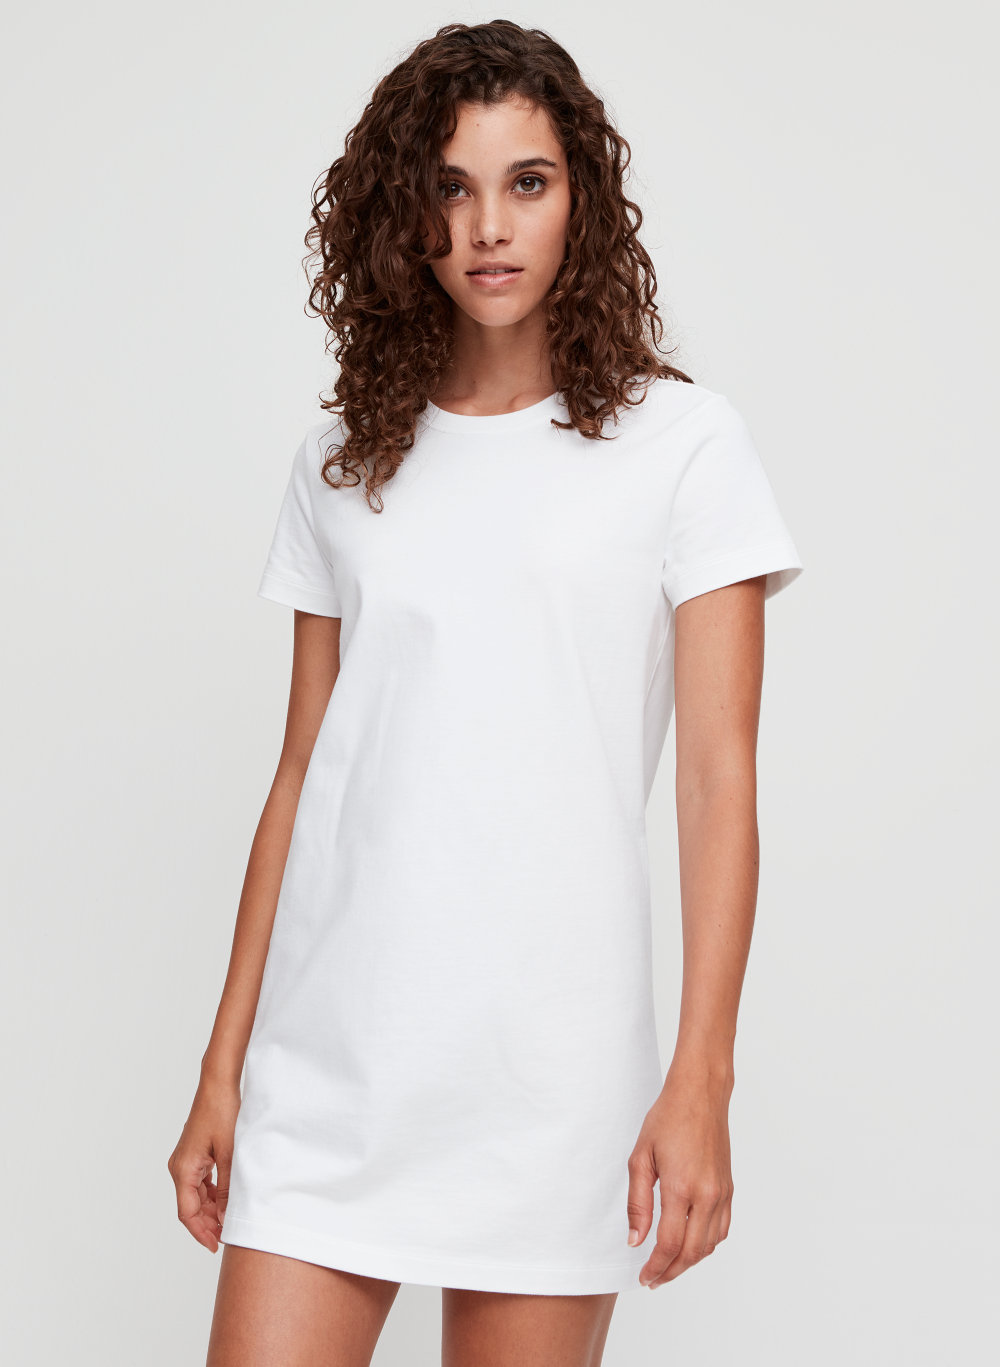 dress and white t shirt